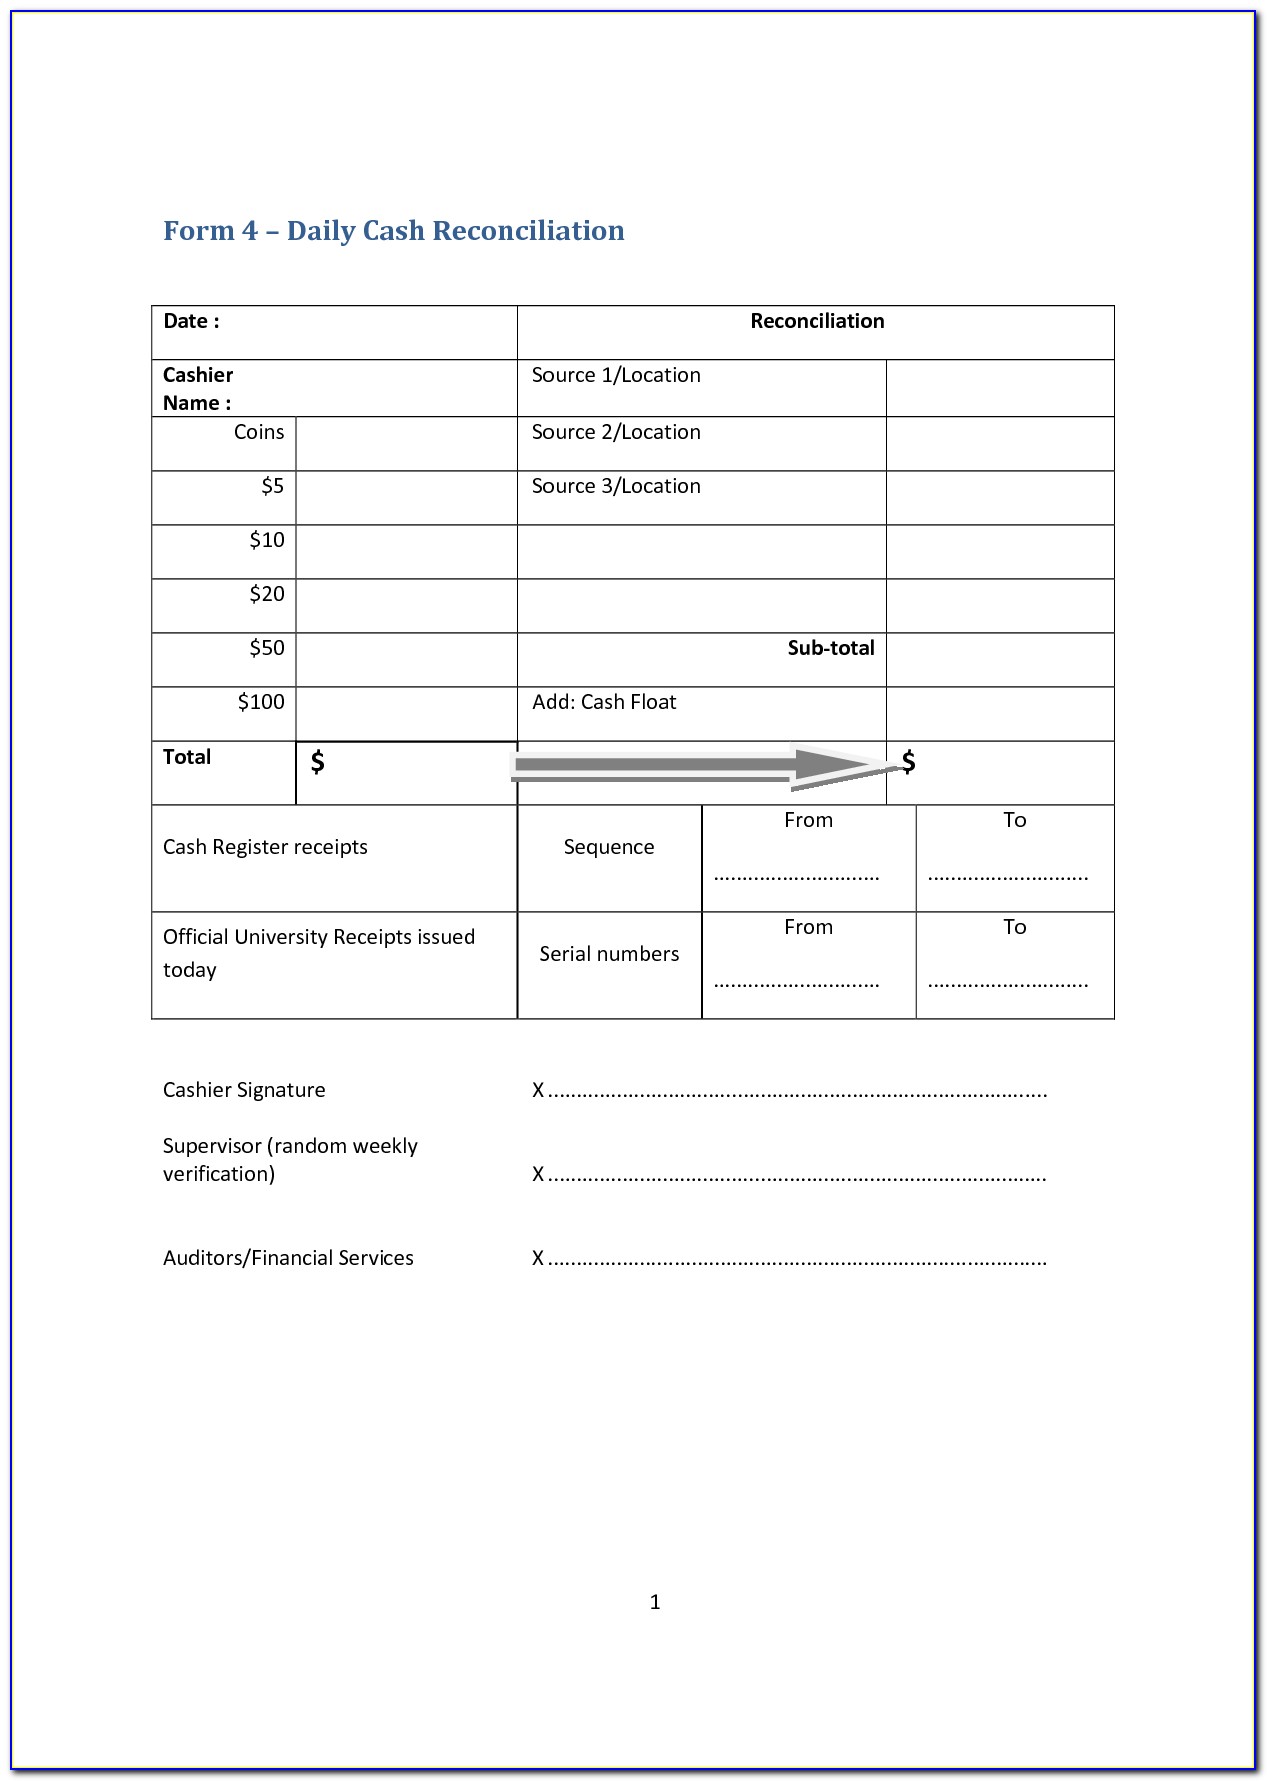 Cash Register Reconciliation Form Excel